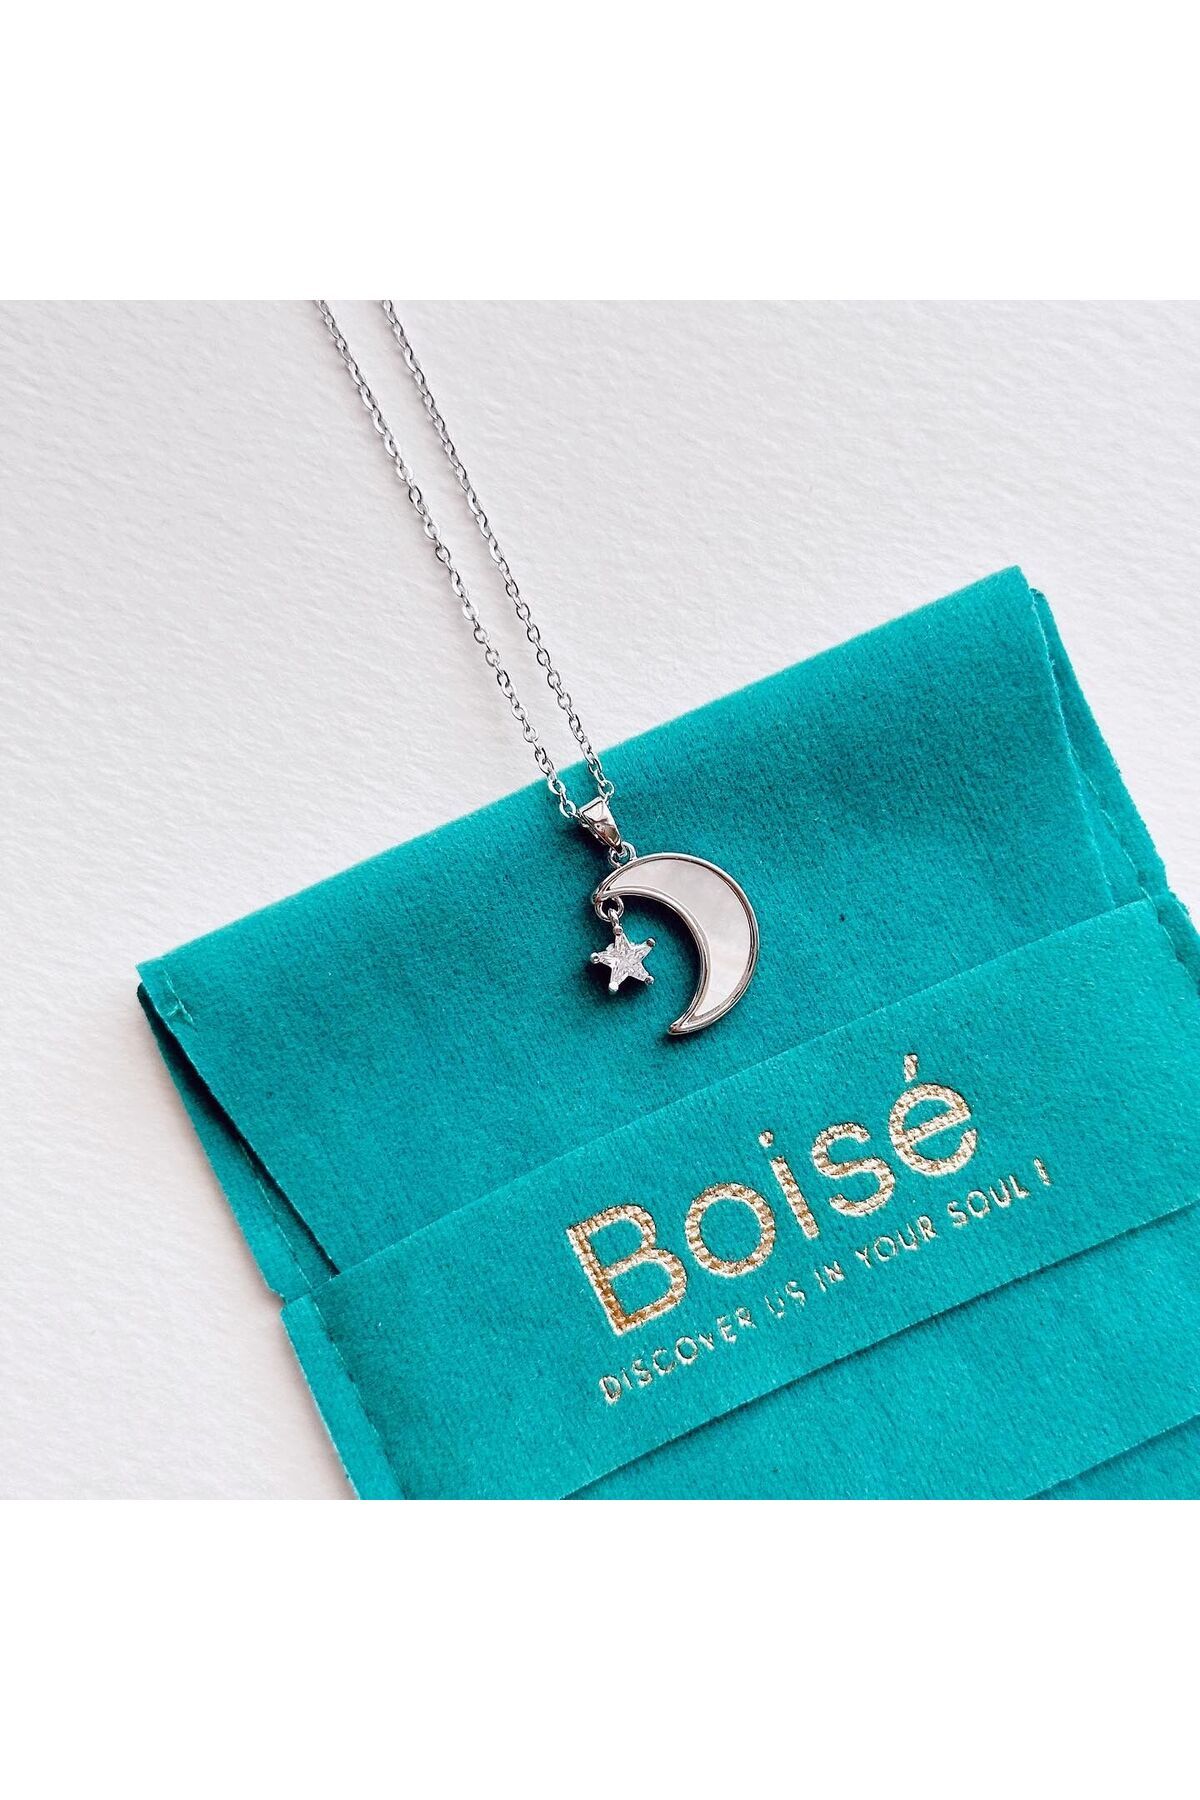 Boise Atelier Criss Steel Necklace